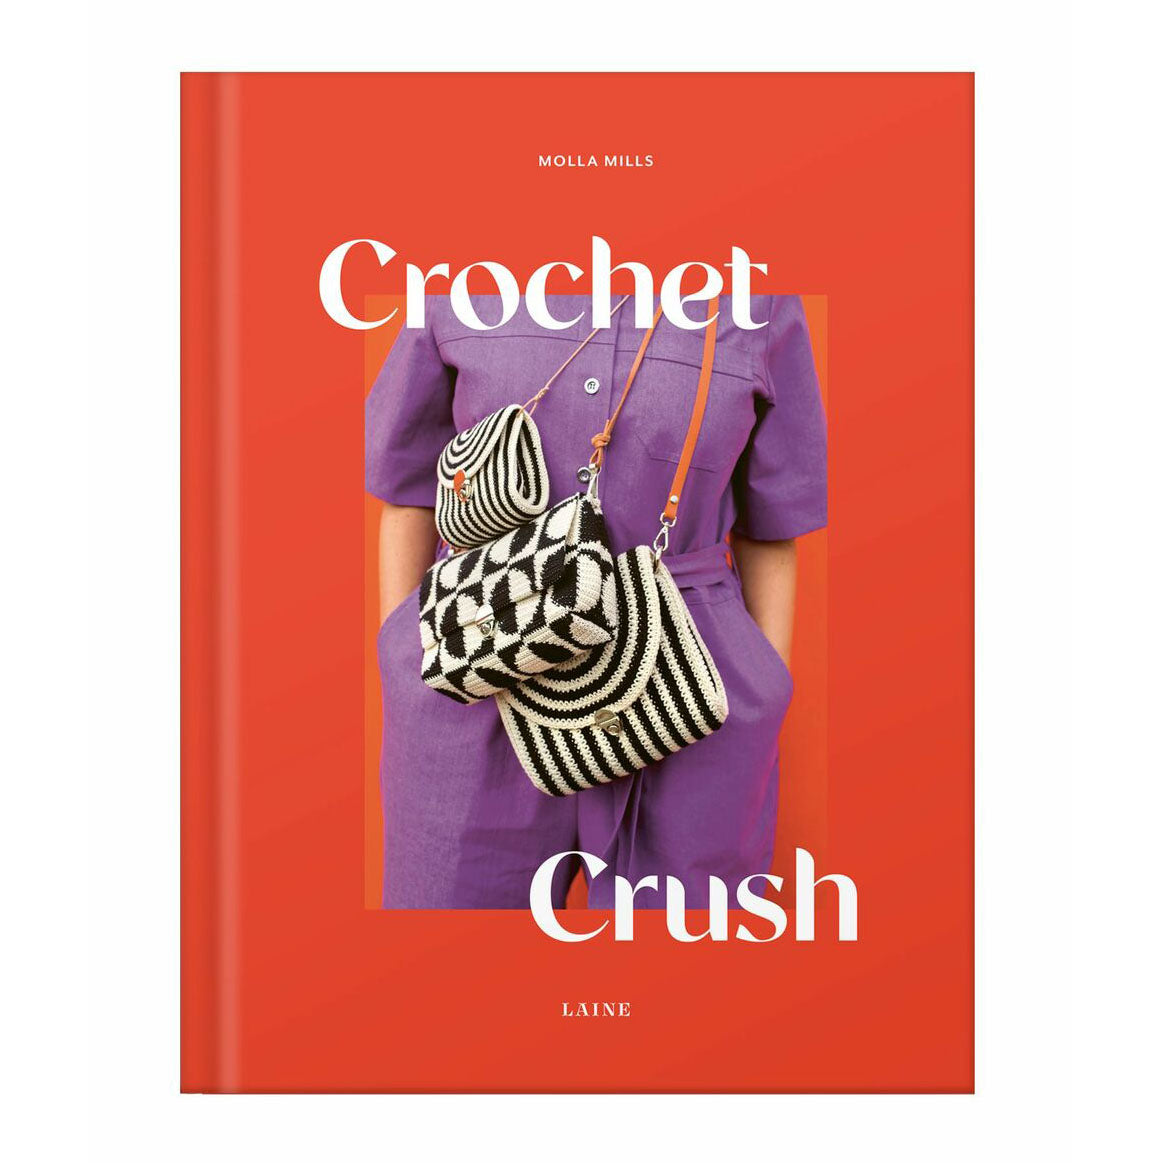 Crochet Crush (Molla Mills)